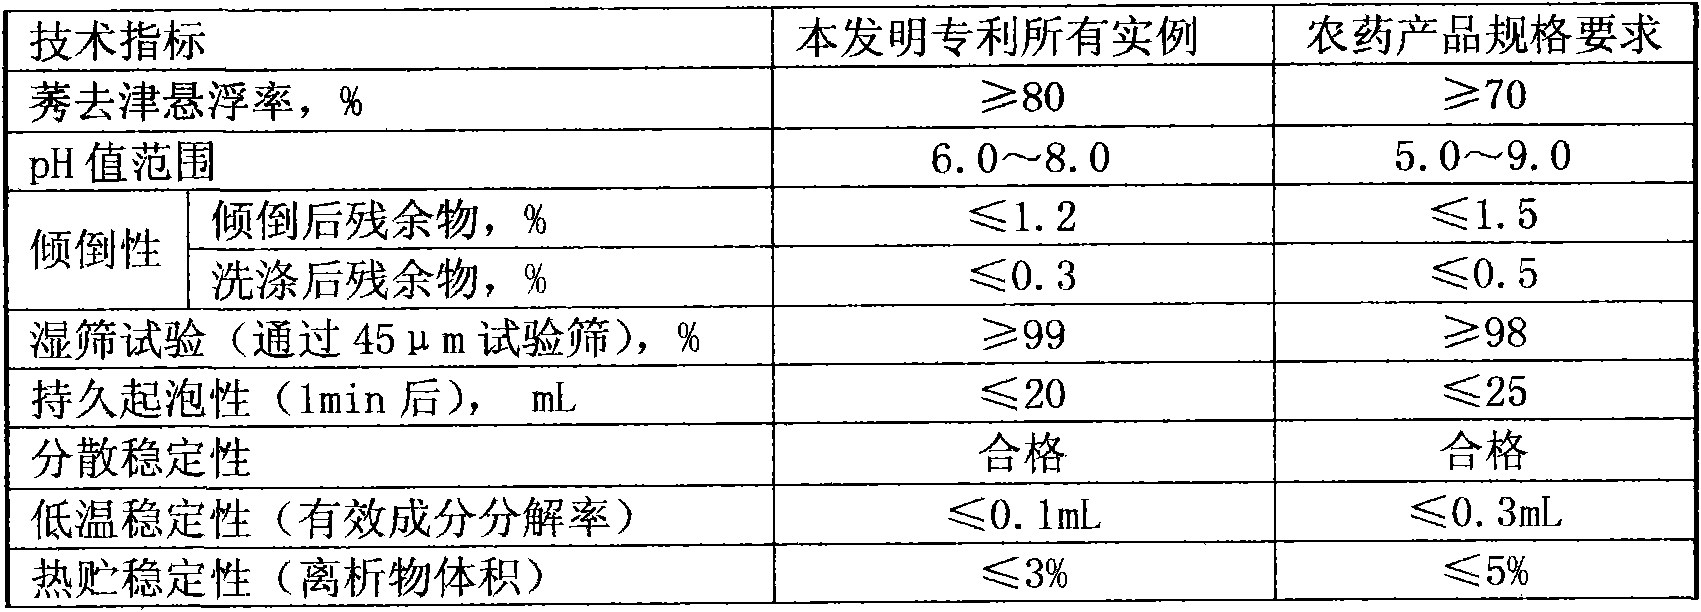 Pesticide composition containing flutenzine and abamectin